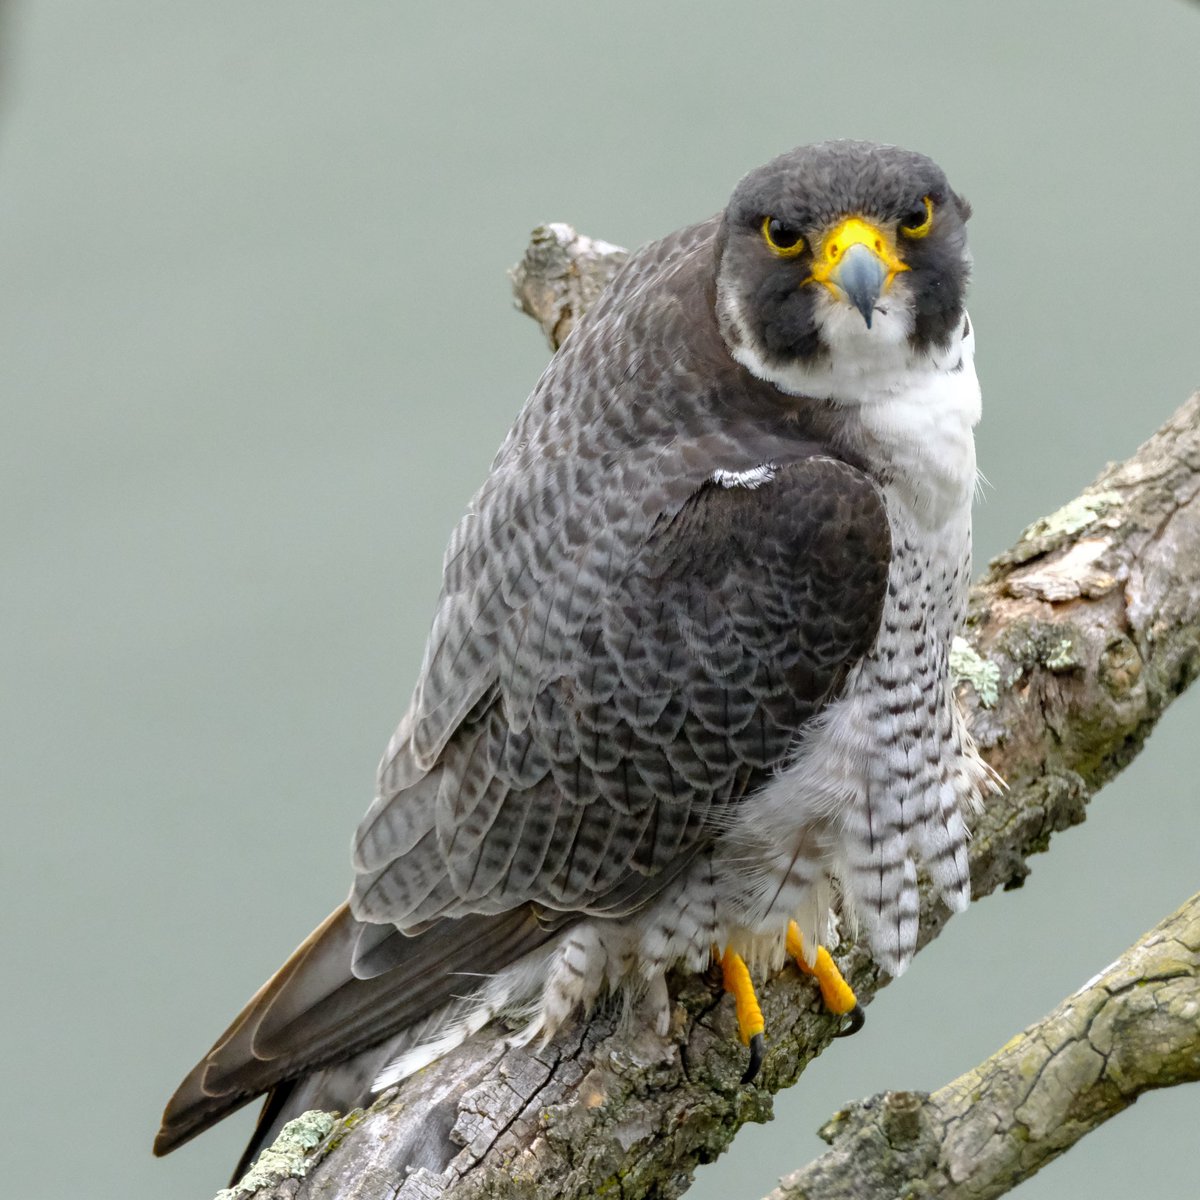 Falcon attitude 
#BirdsOfPrey #peregrinefalcon #BirdsOfTwitter #whatalexshot2 #fujifilm_xseries